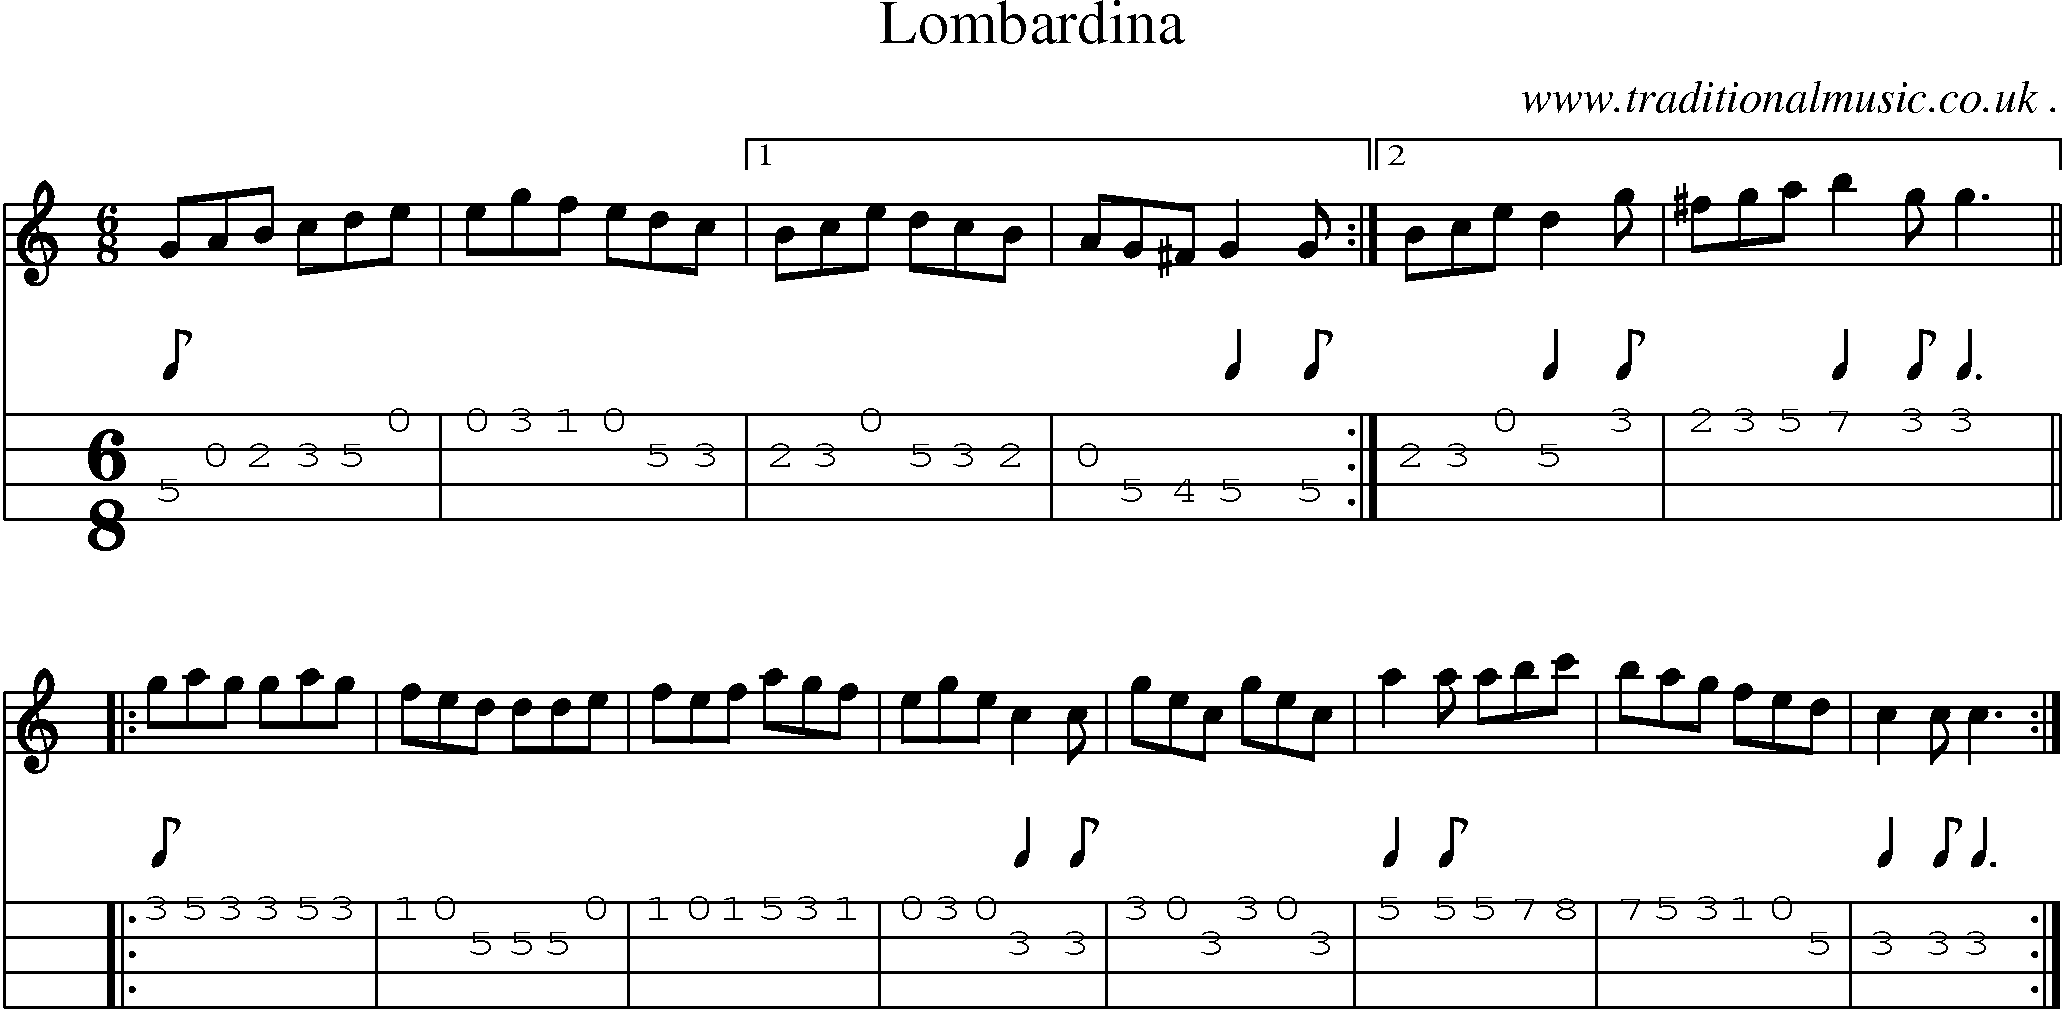 Sheet-Music and Mandolin Tabs for Lombardina